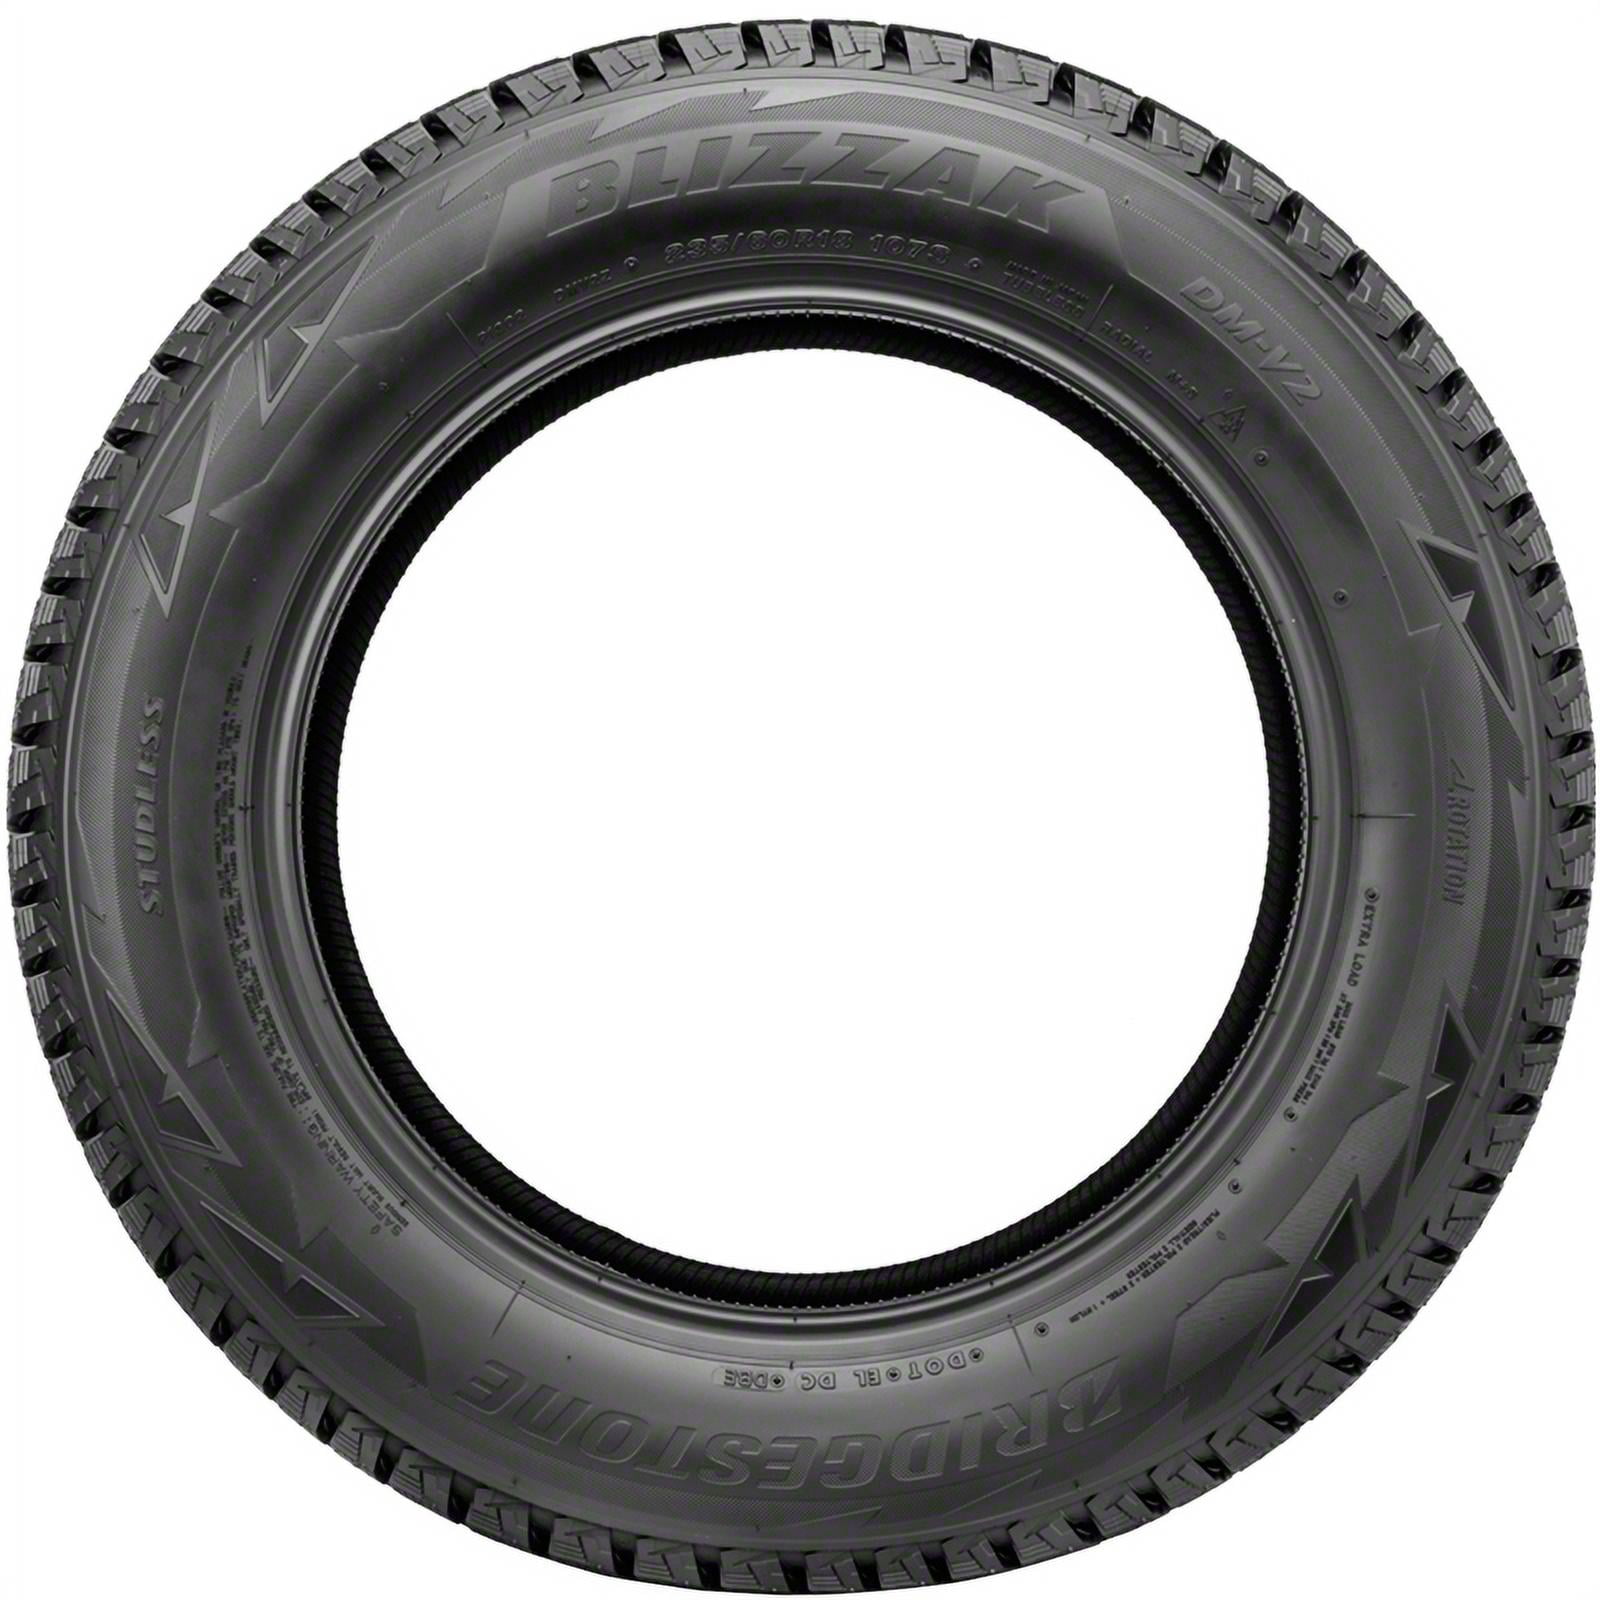 Bridgestone blizzak dm-v2 P225/65R17 102S bsw winter tire